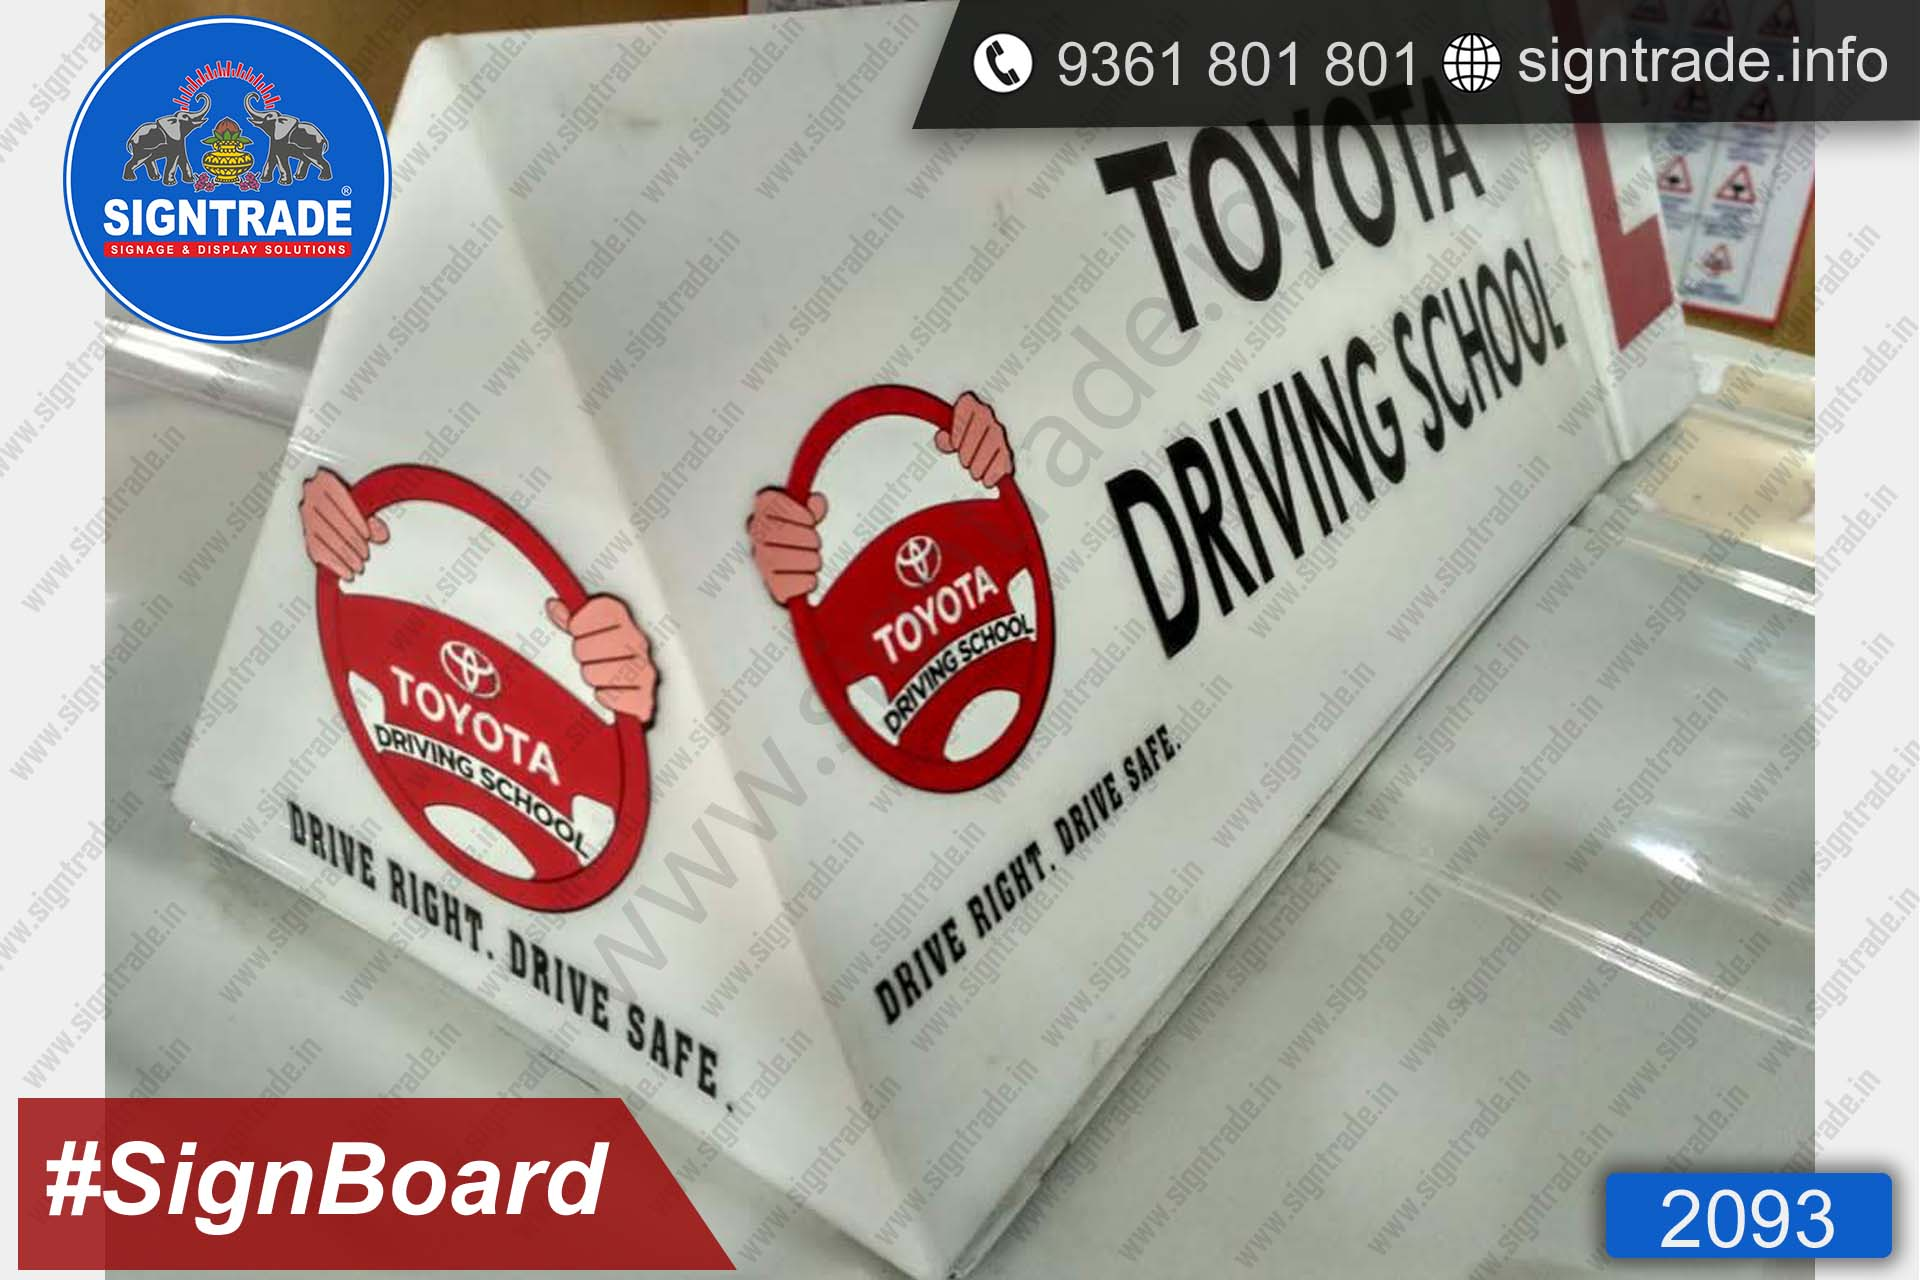 Toyota Driving School